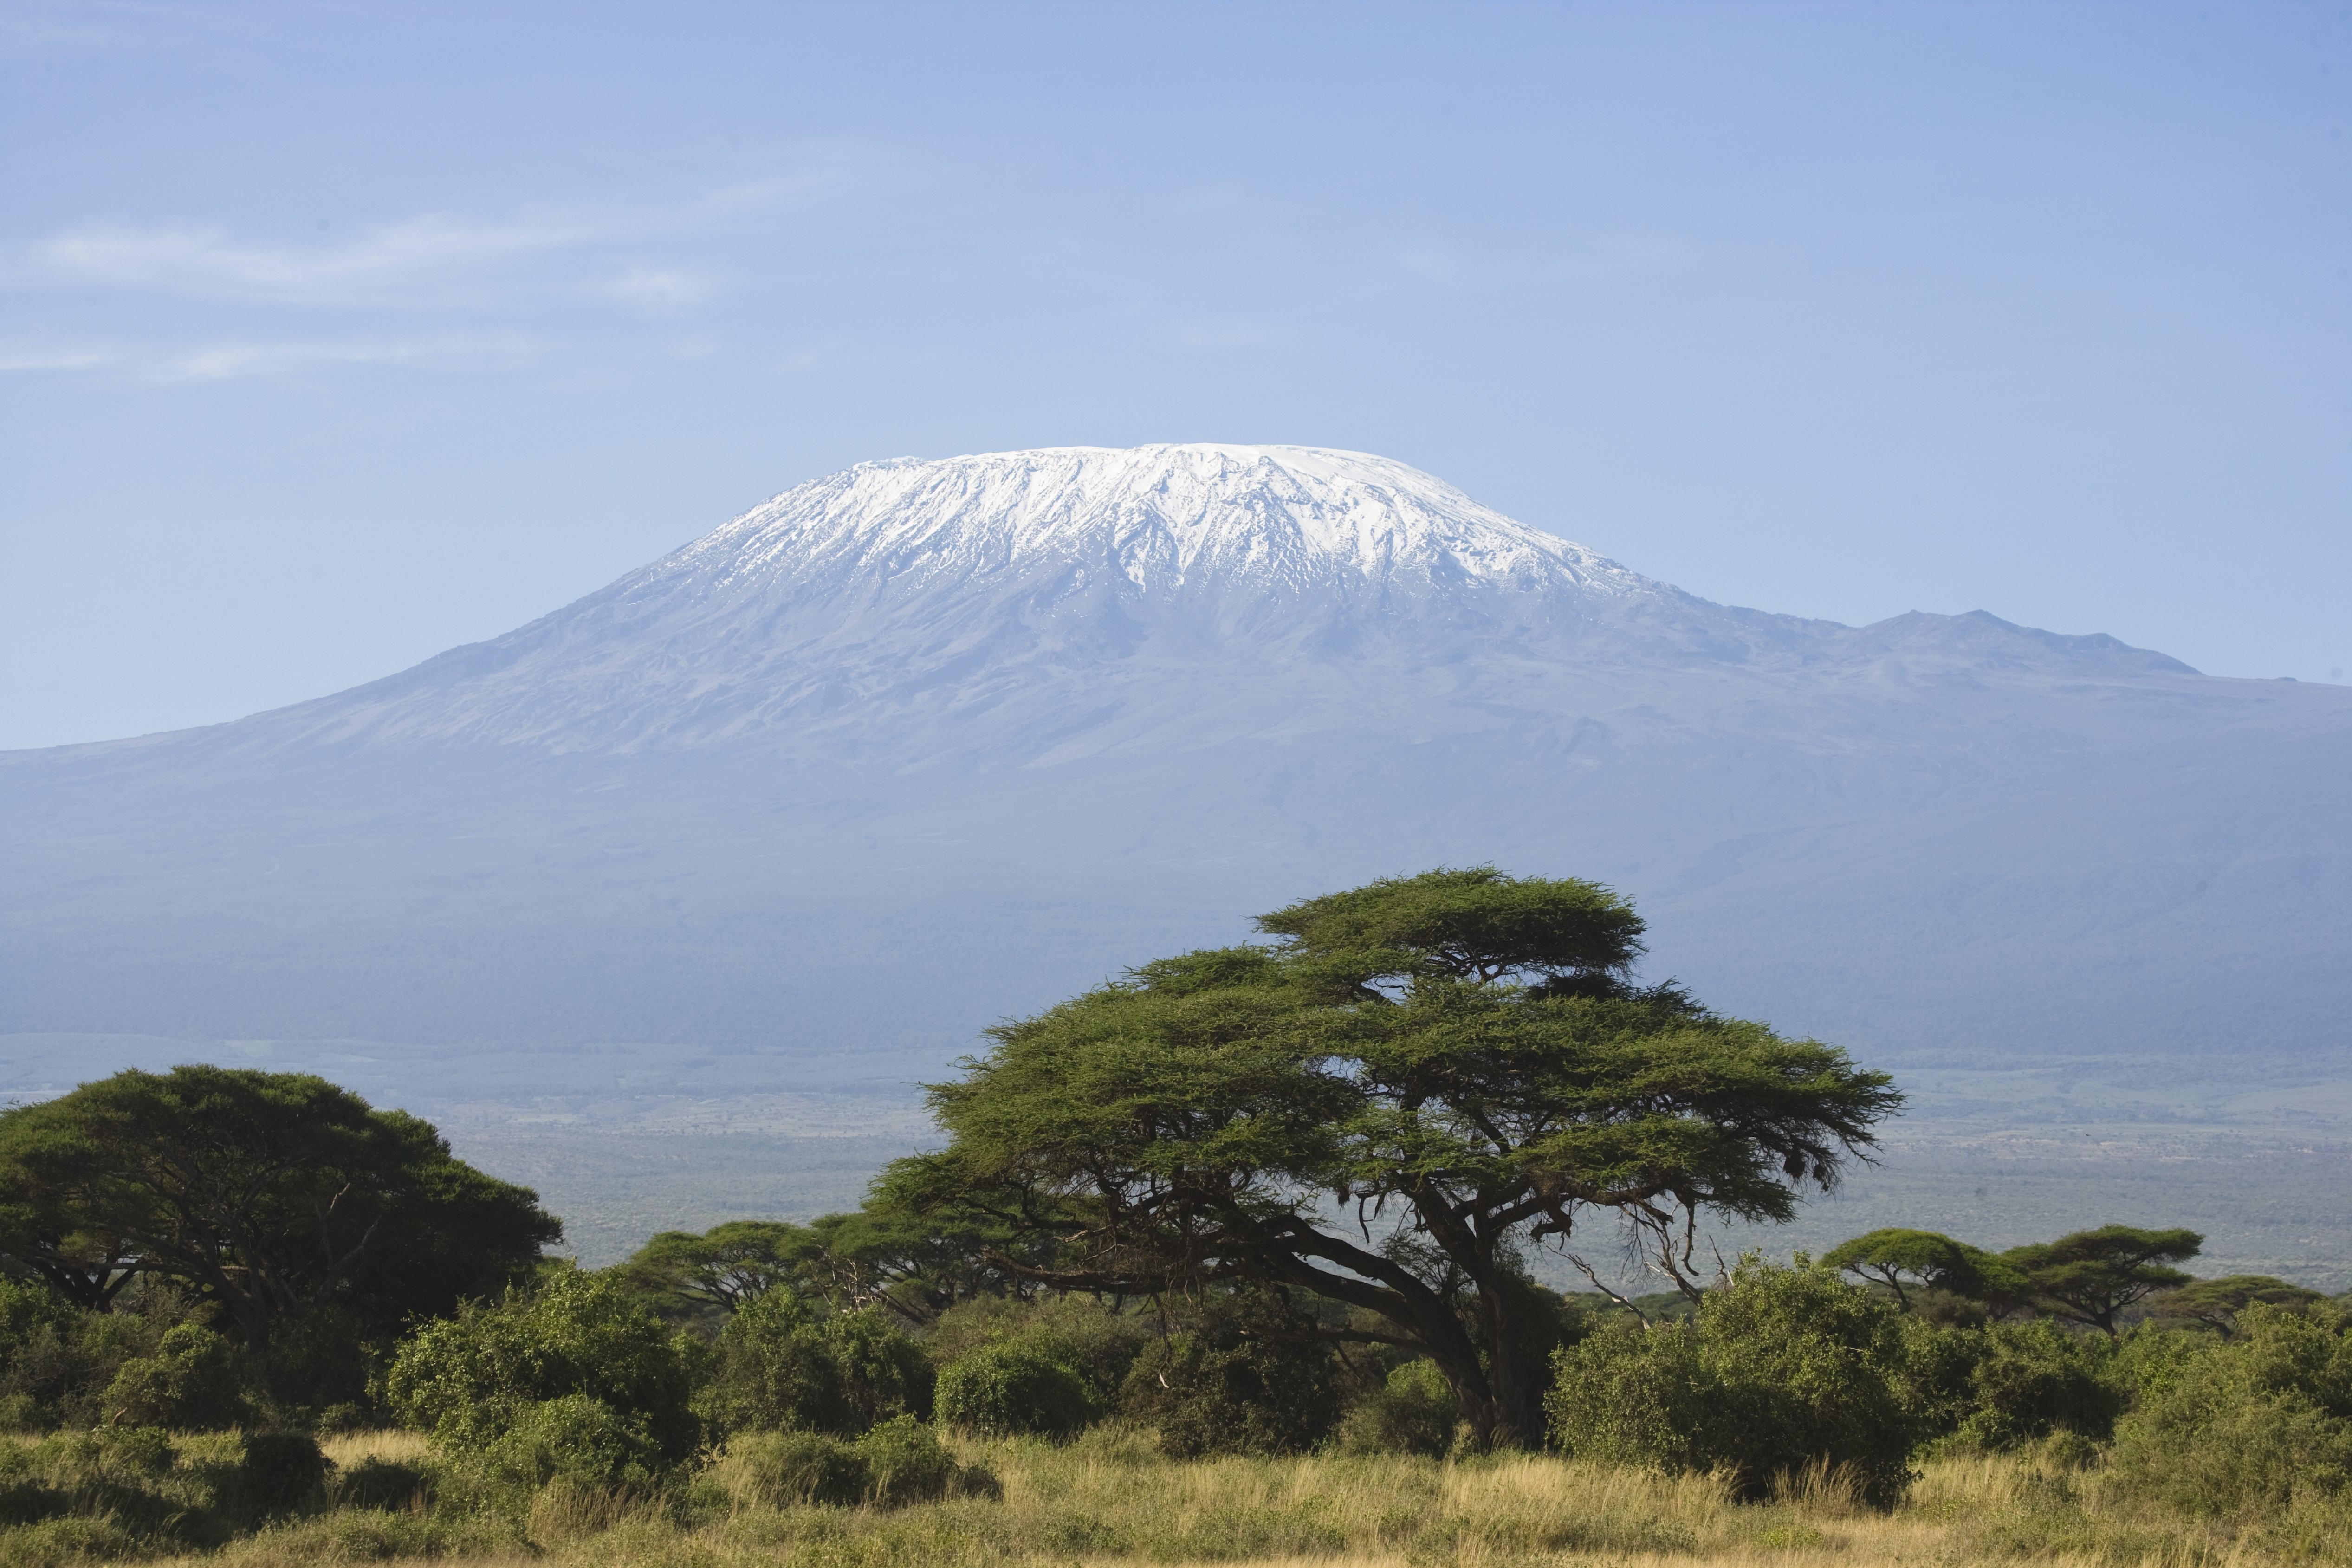 Mt. Kilimanjaro, Savanah in foreground. 